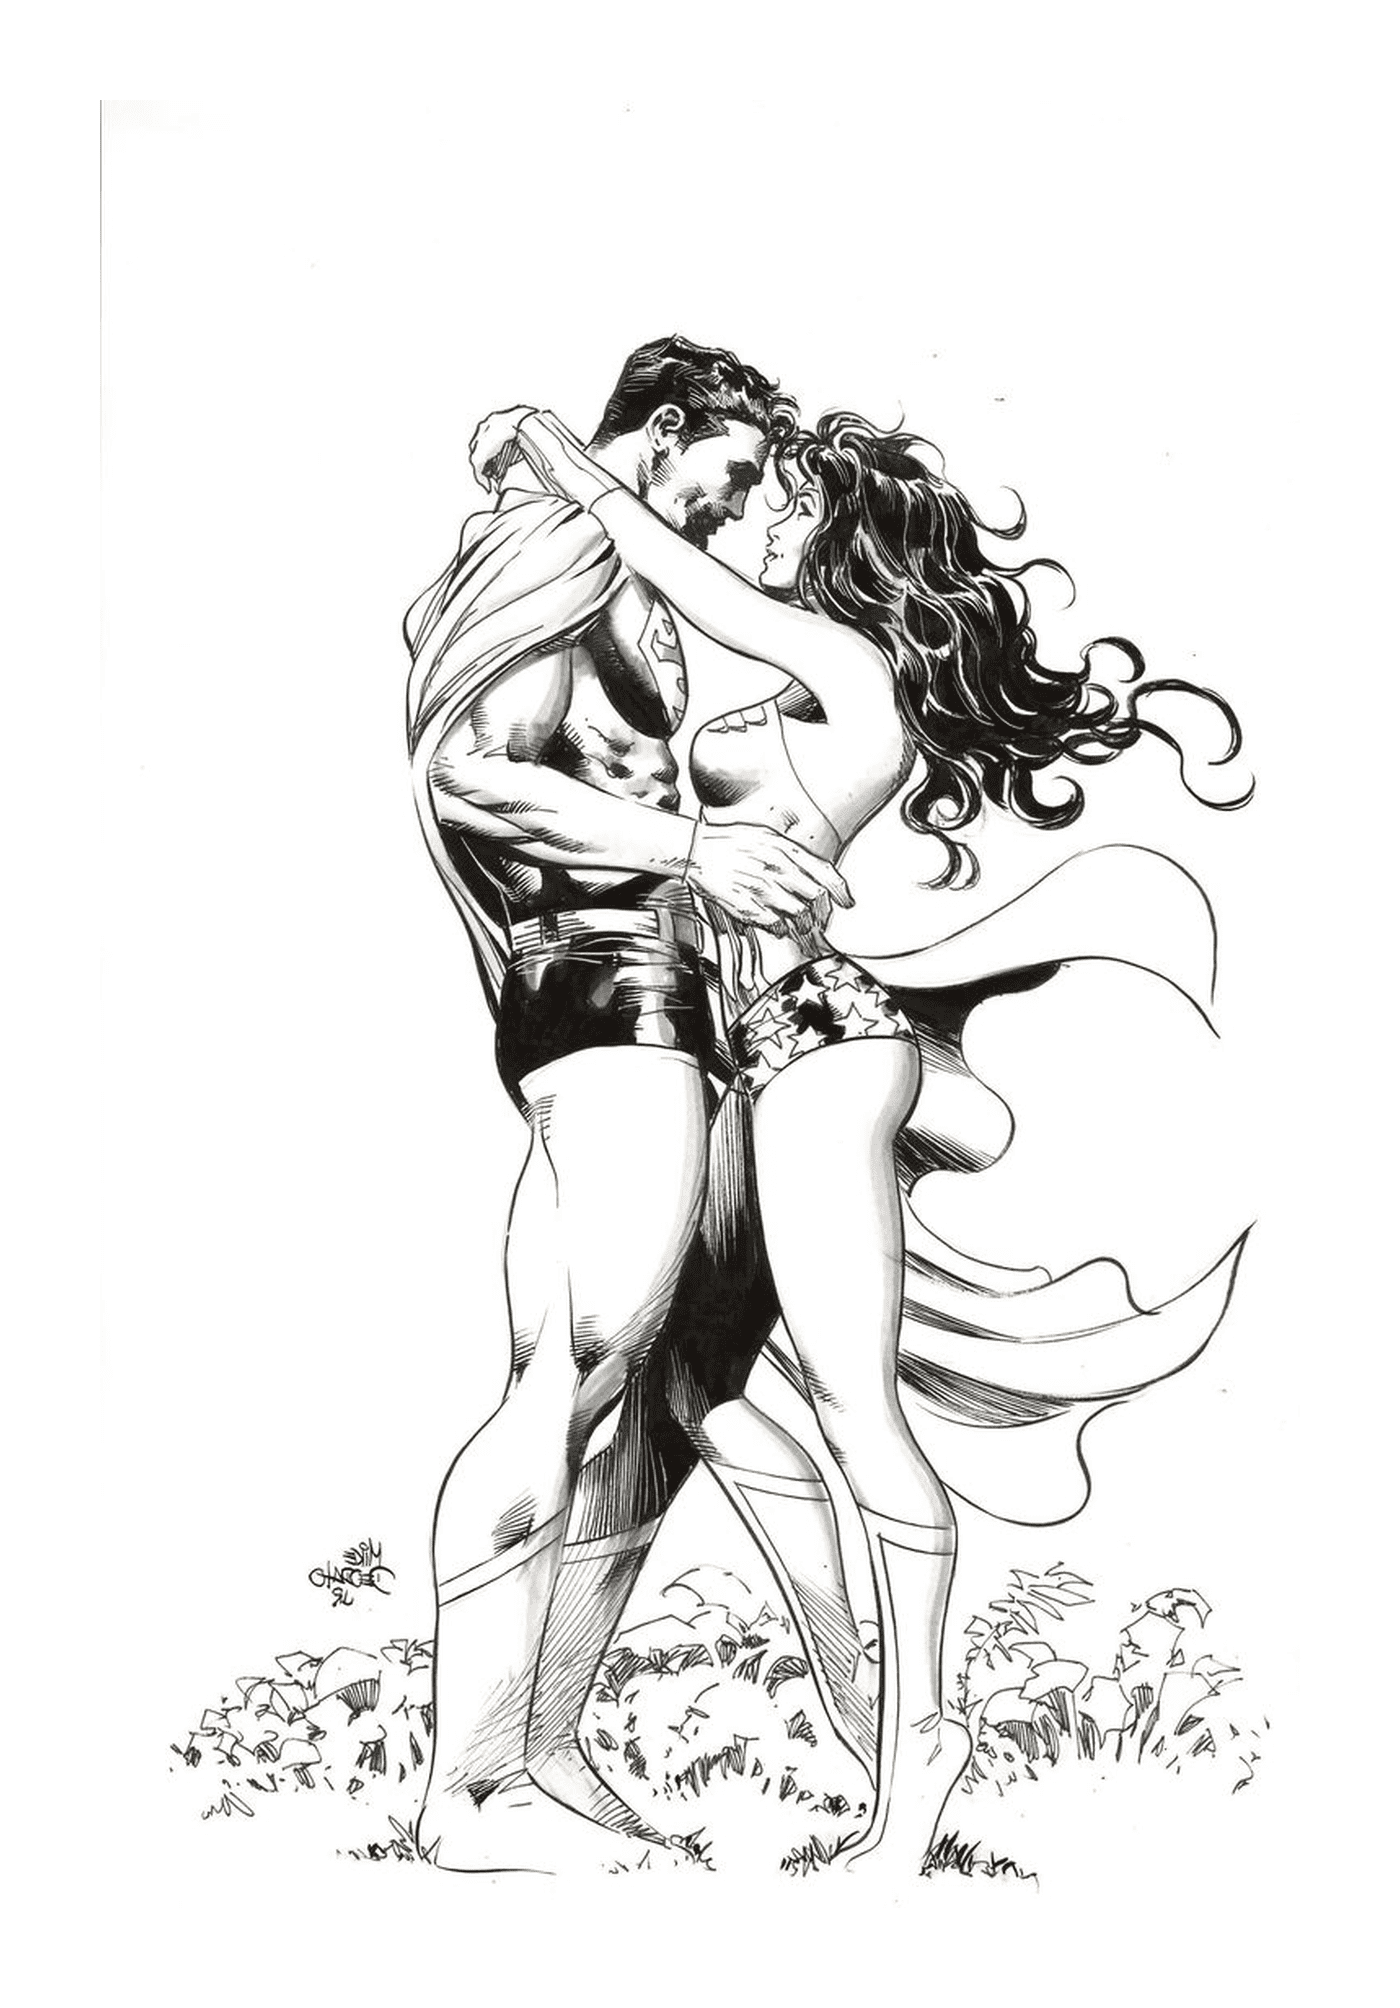  Мужчина и женщина, Чудо-женщина влюблена в Супермена 